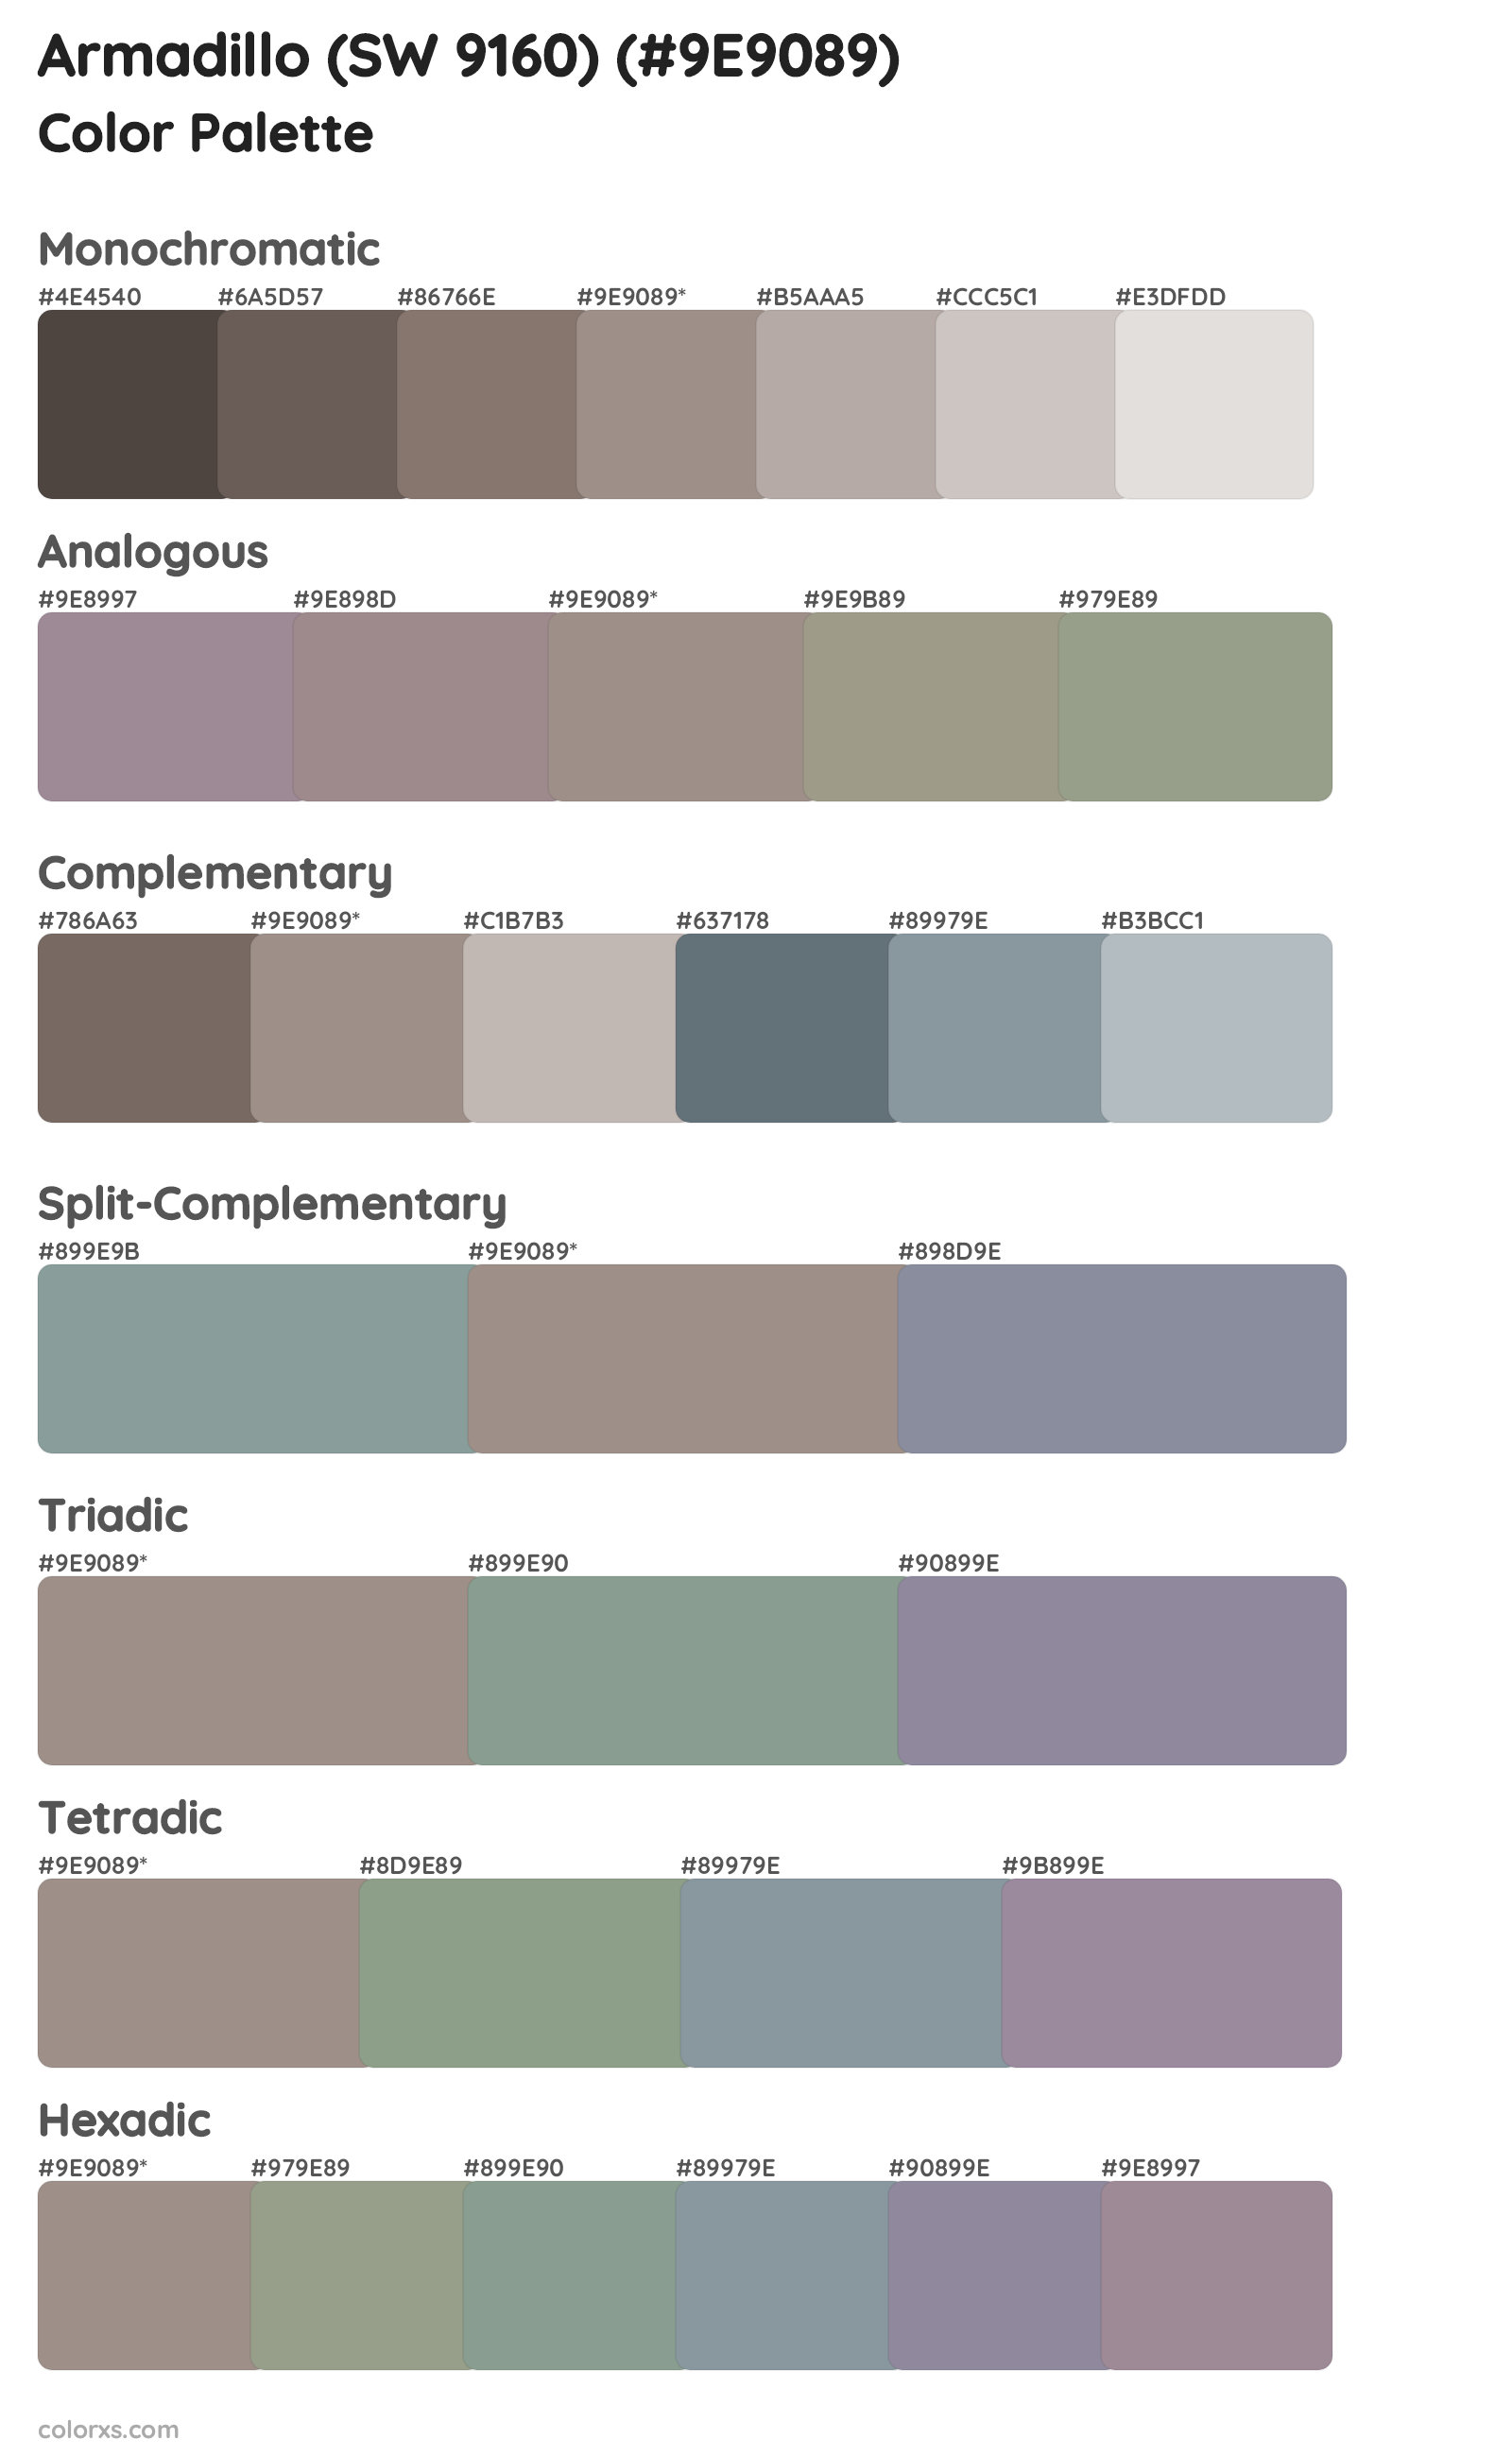 Armadillo (SW 9160) Color Scheme Palettes